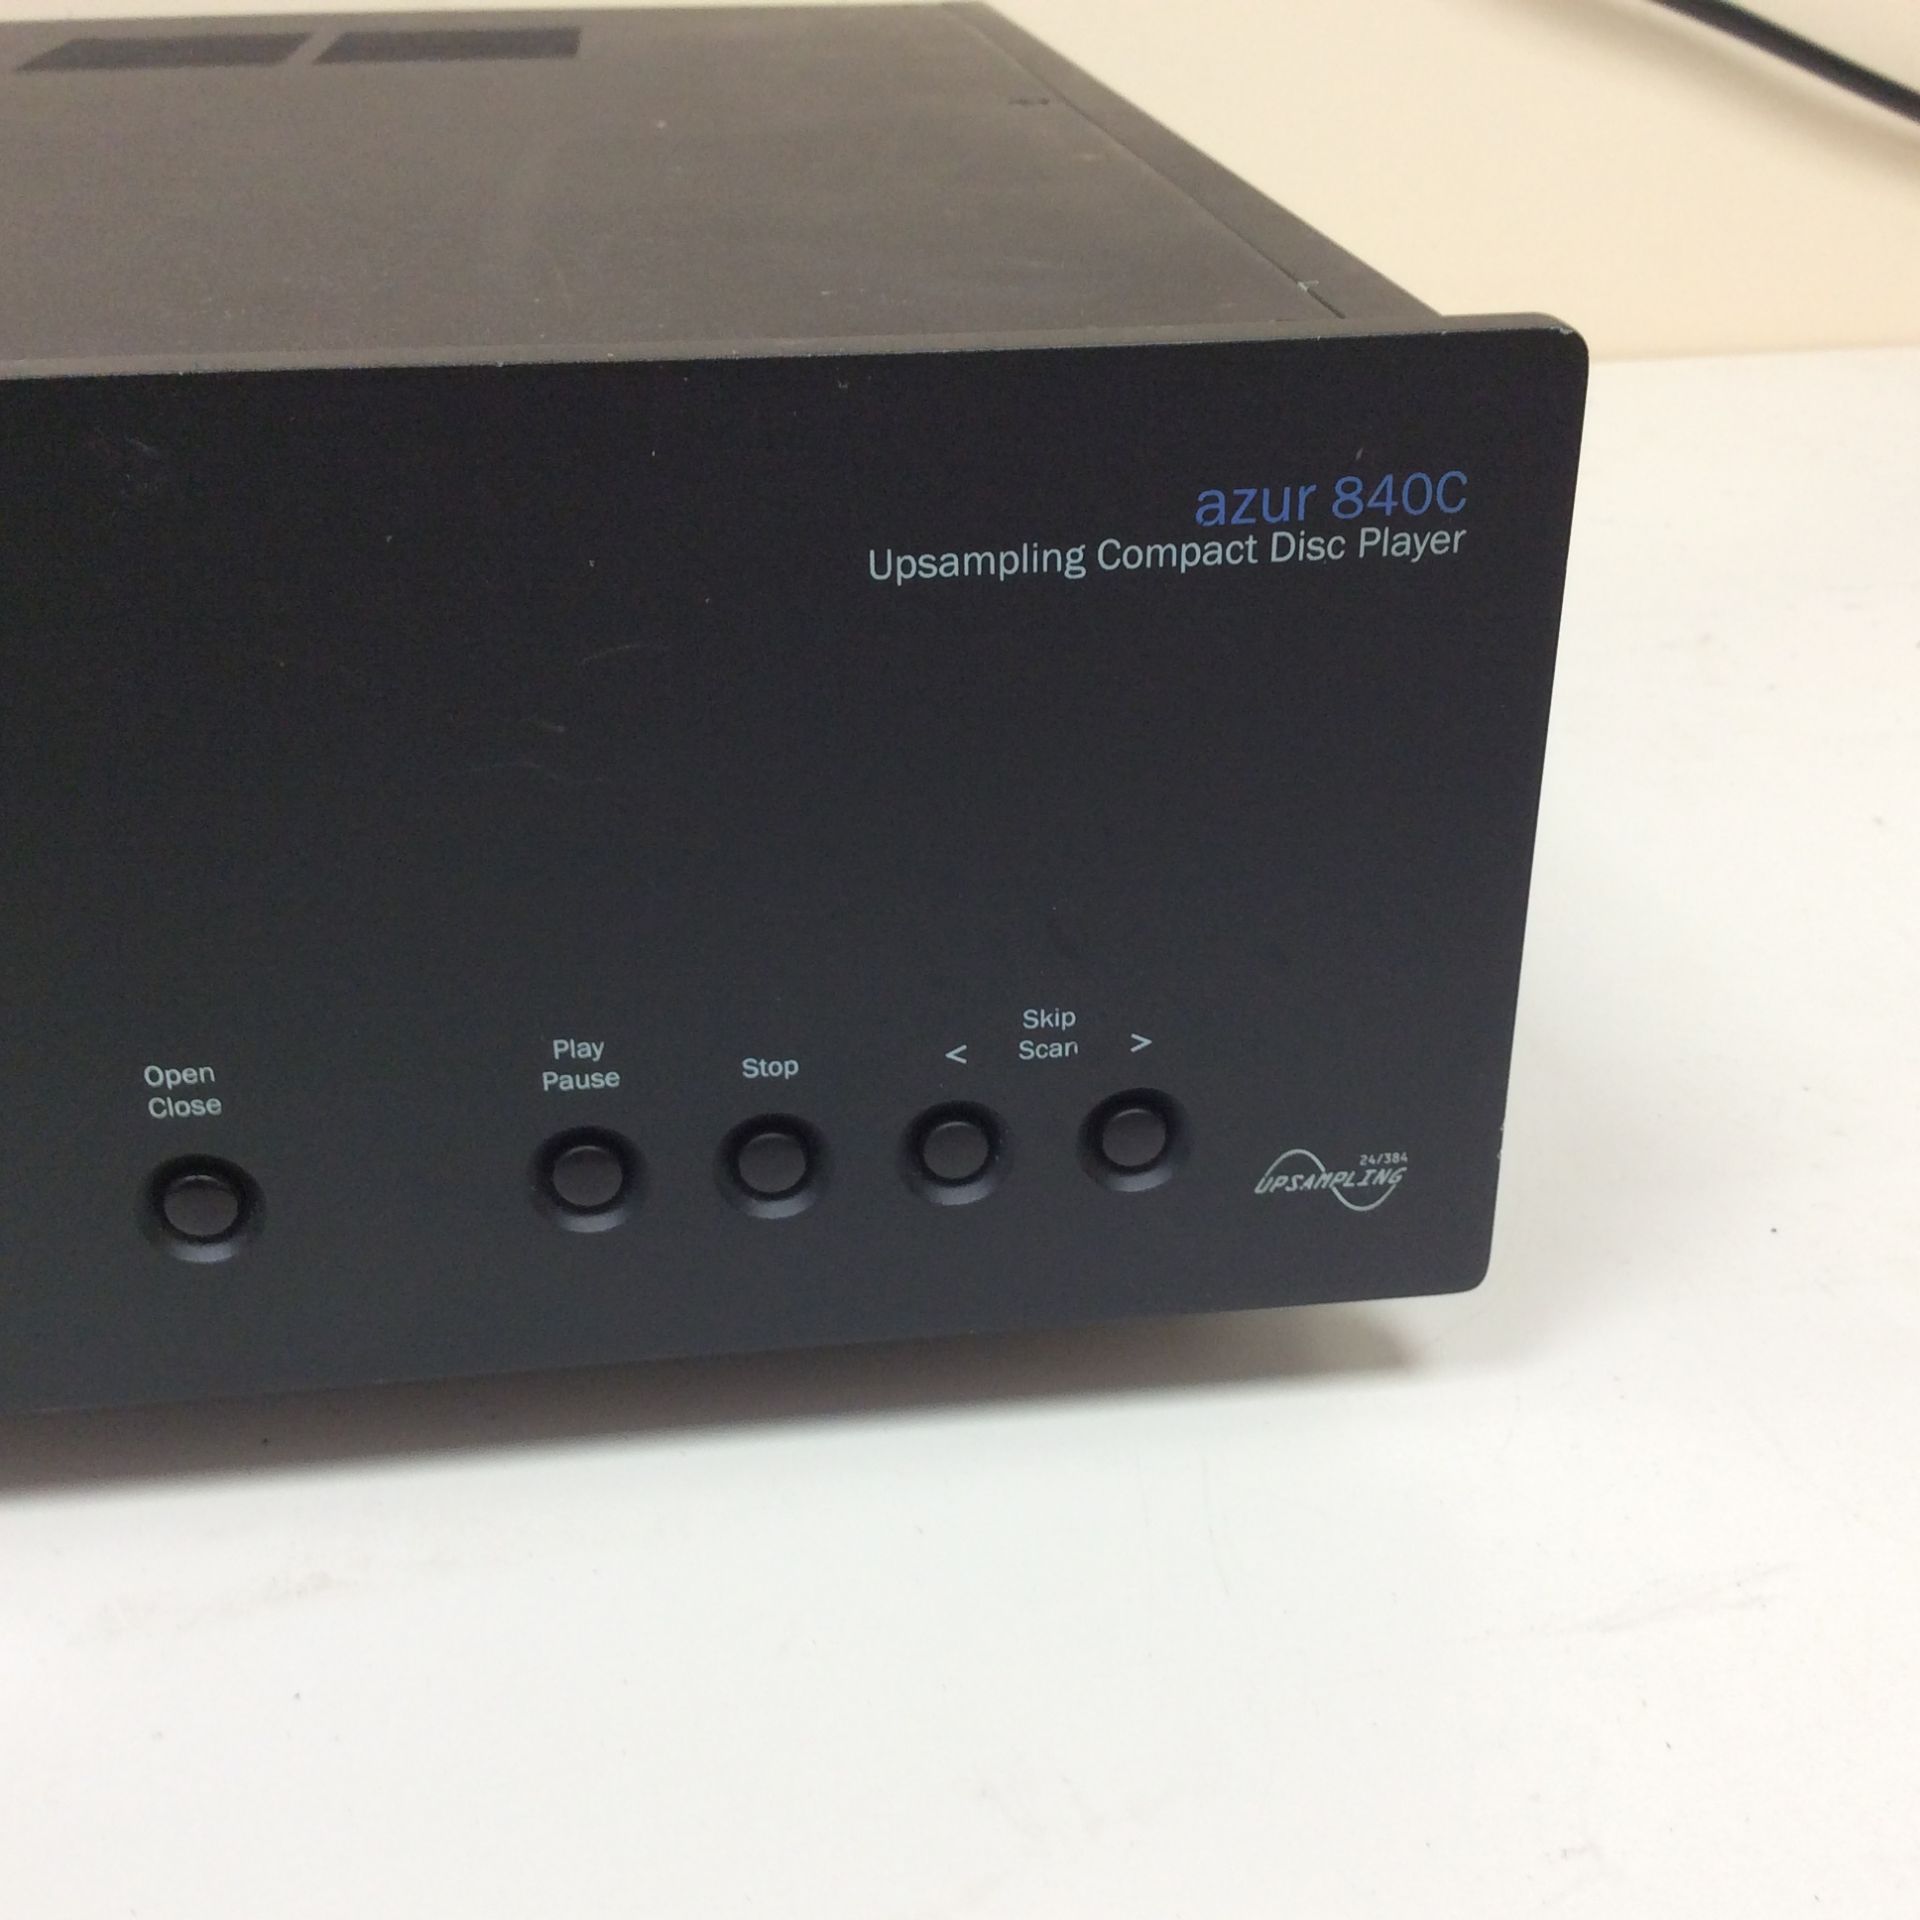 Cambridge audio azur 840c upsampling compact disc player - Image 2 of 4